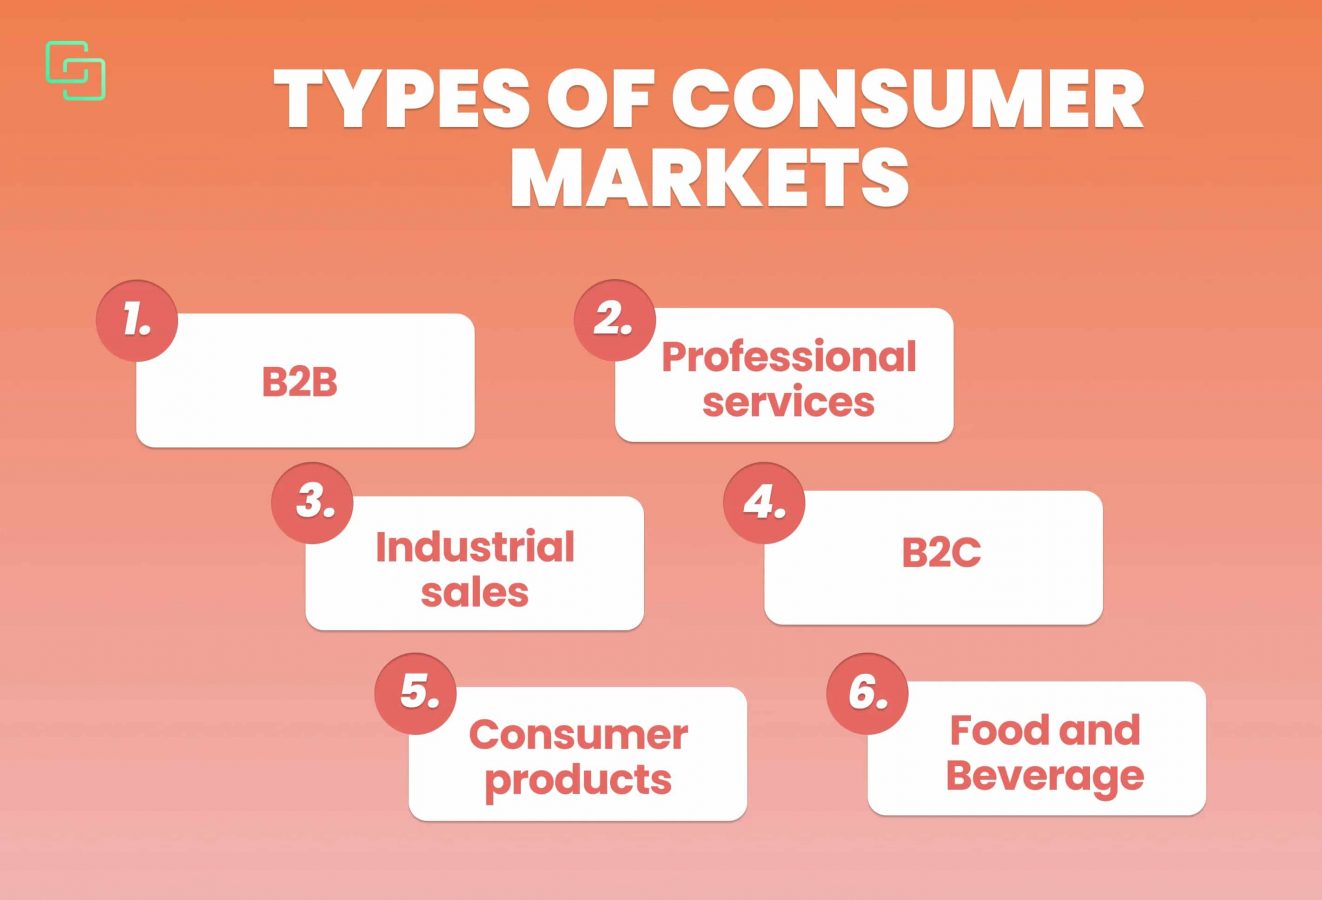 Types of consumer markets